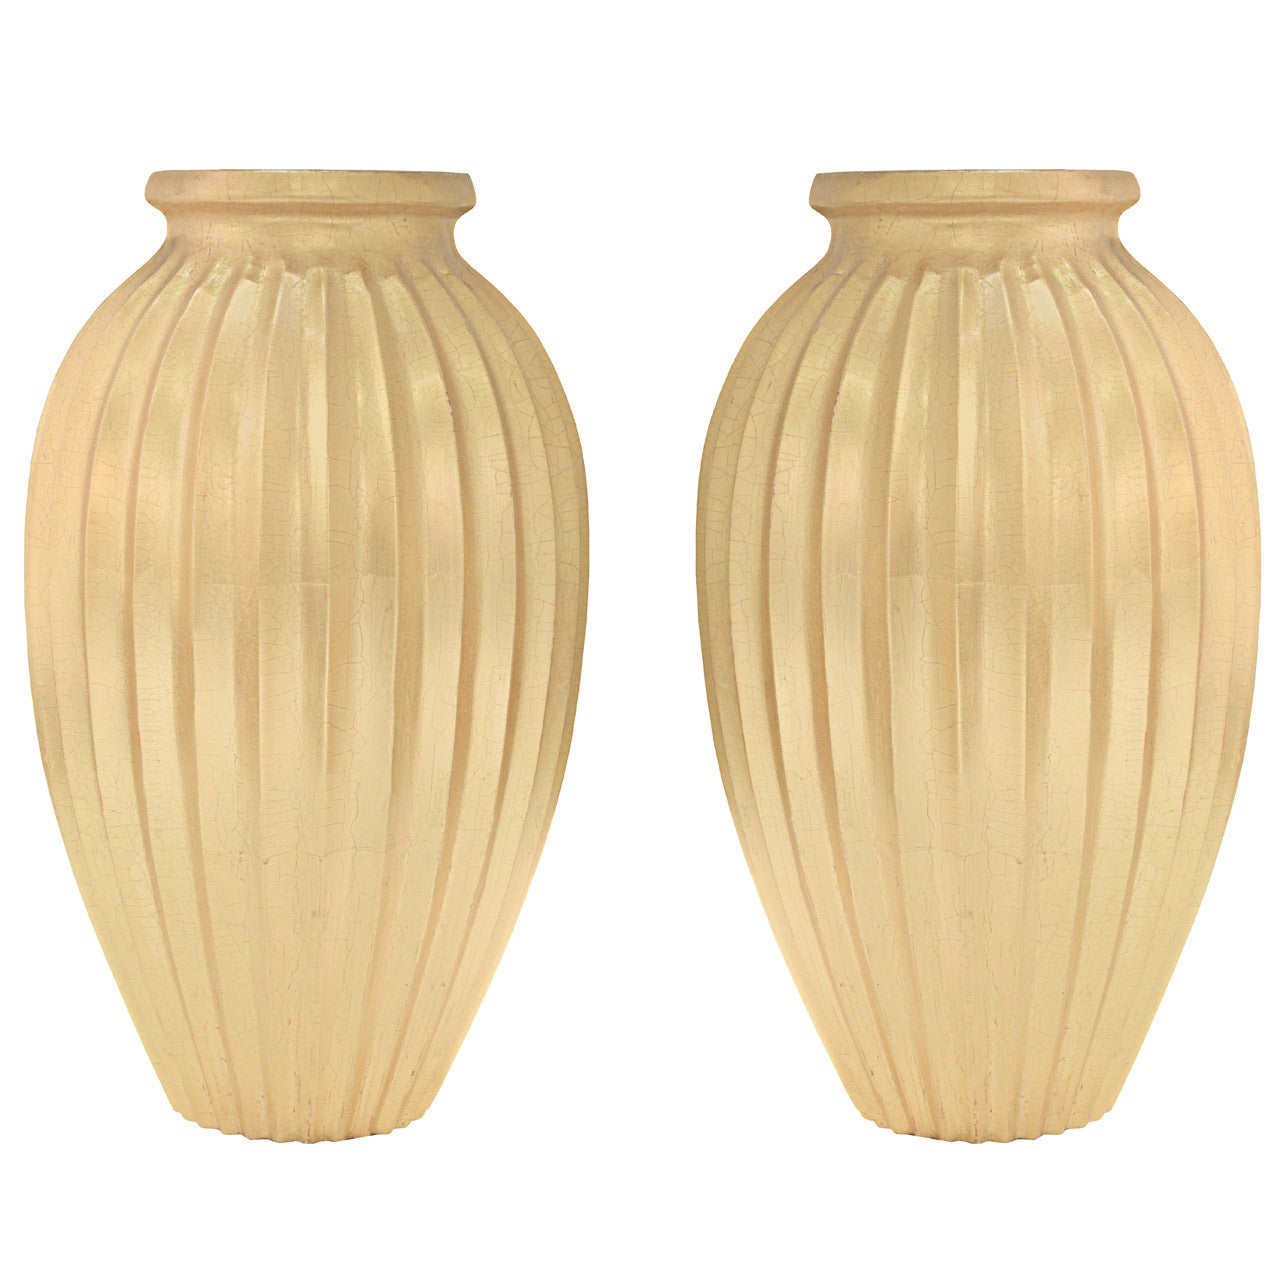 Pair of Large Fluted Vases with Light Venetian Gold Leaf by Karl Springer